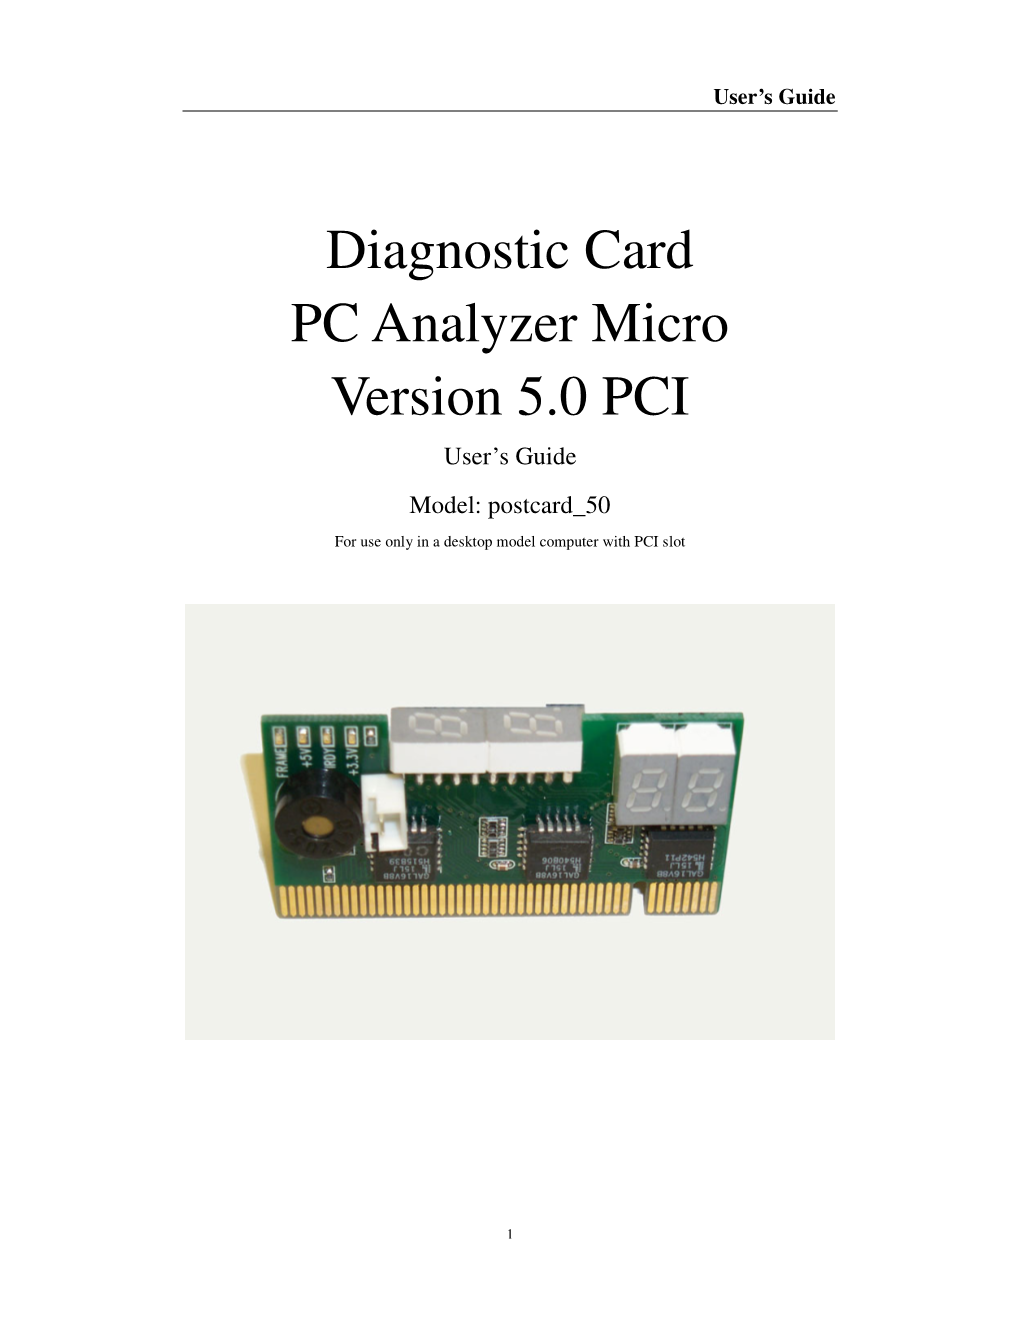 Diagnostic Card PC Analyzer Micro Version 5.0 PCI User’S Guide Model: Postcard 50